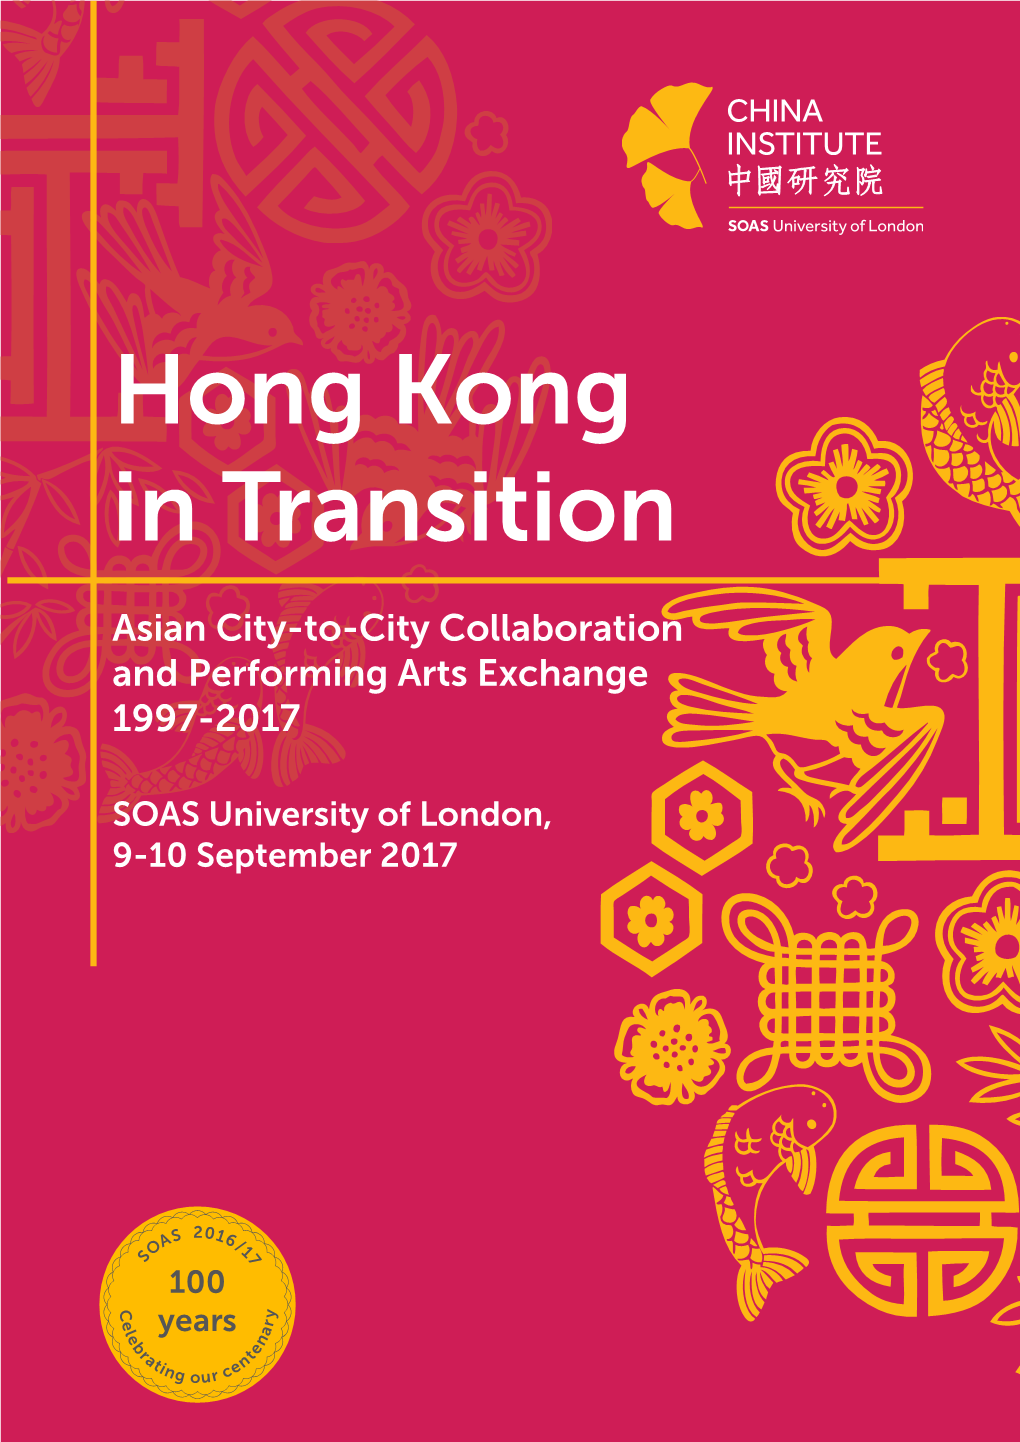 Hong Kong in Transition Programme